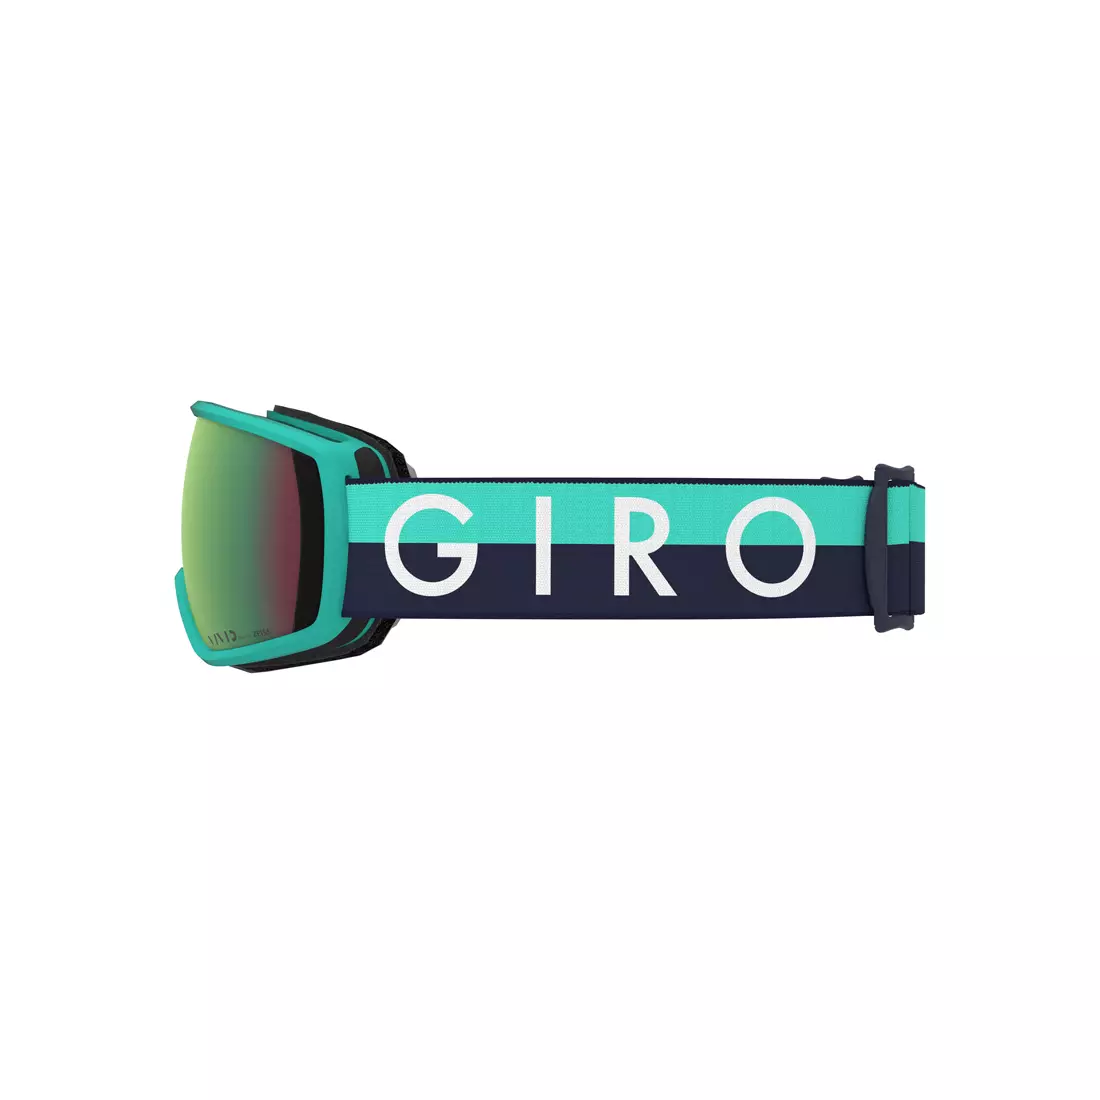 Lyžařské / snowboardové brýle GIRO FACET GLACIER THROWBACK GR-7094544